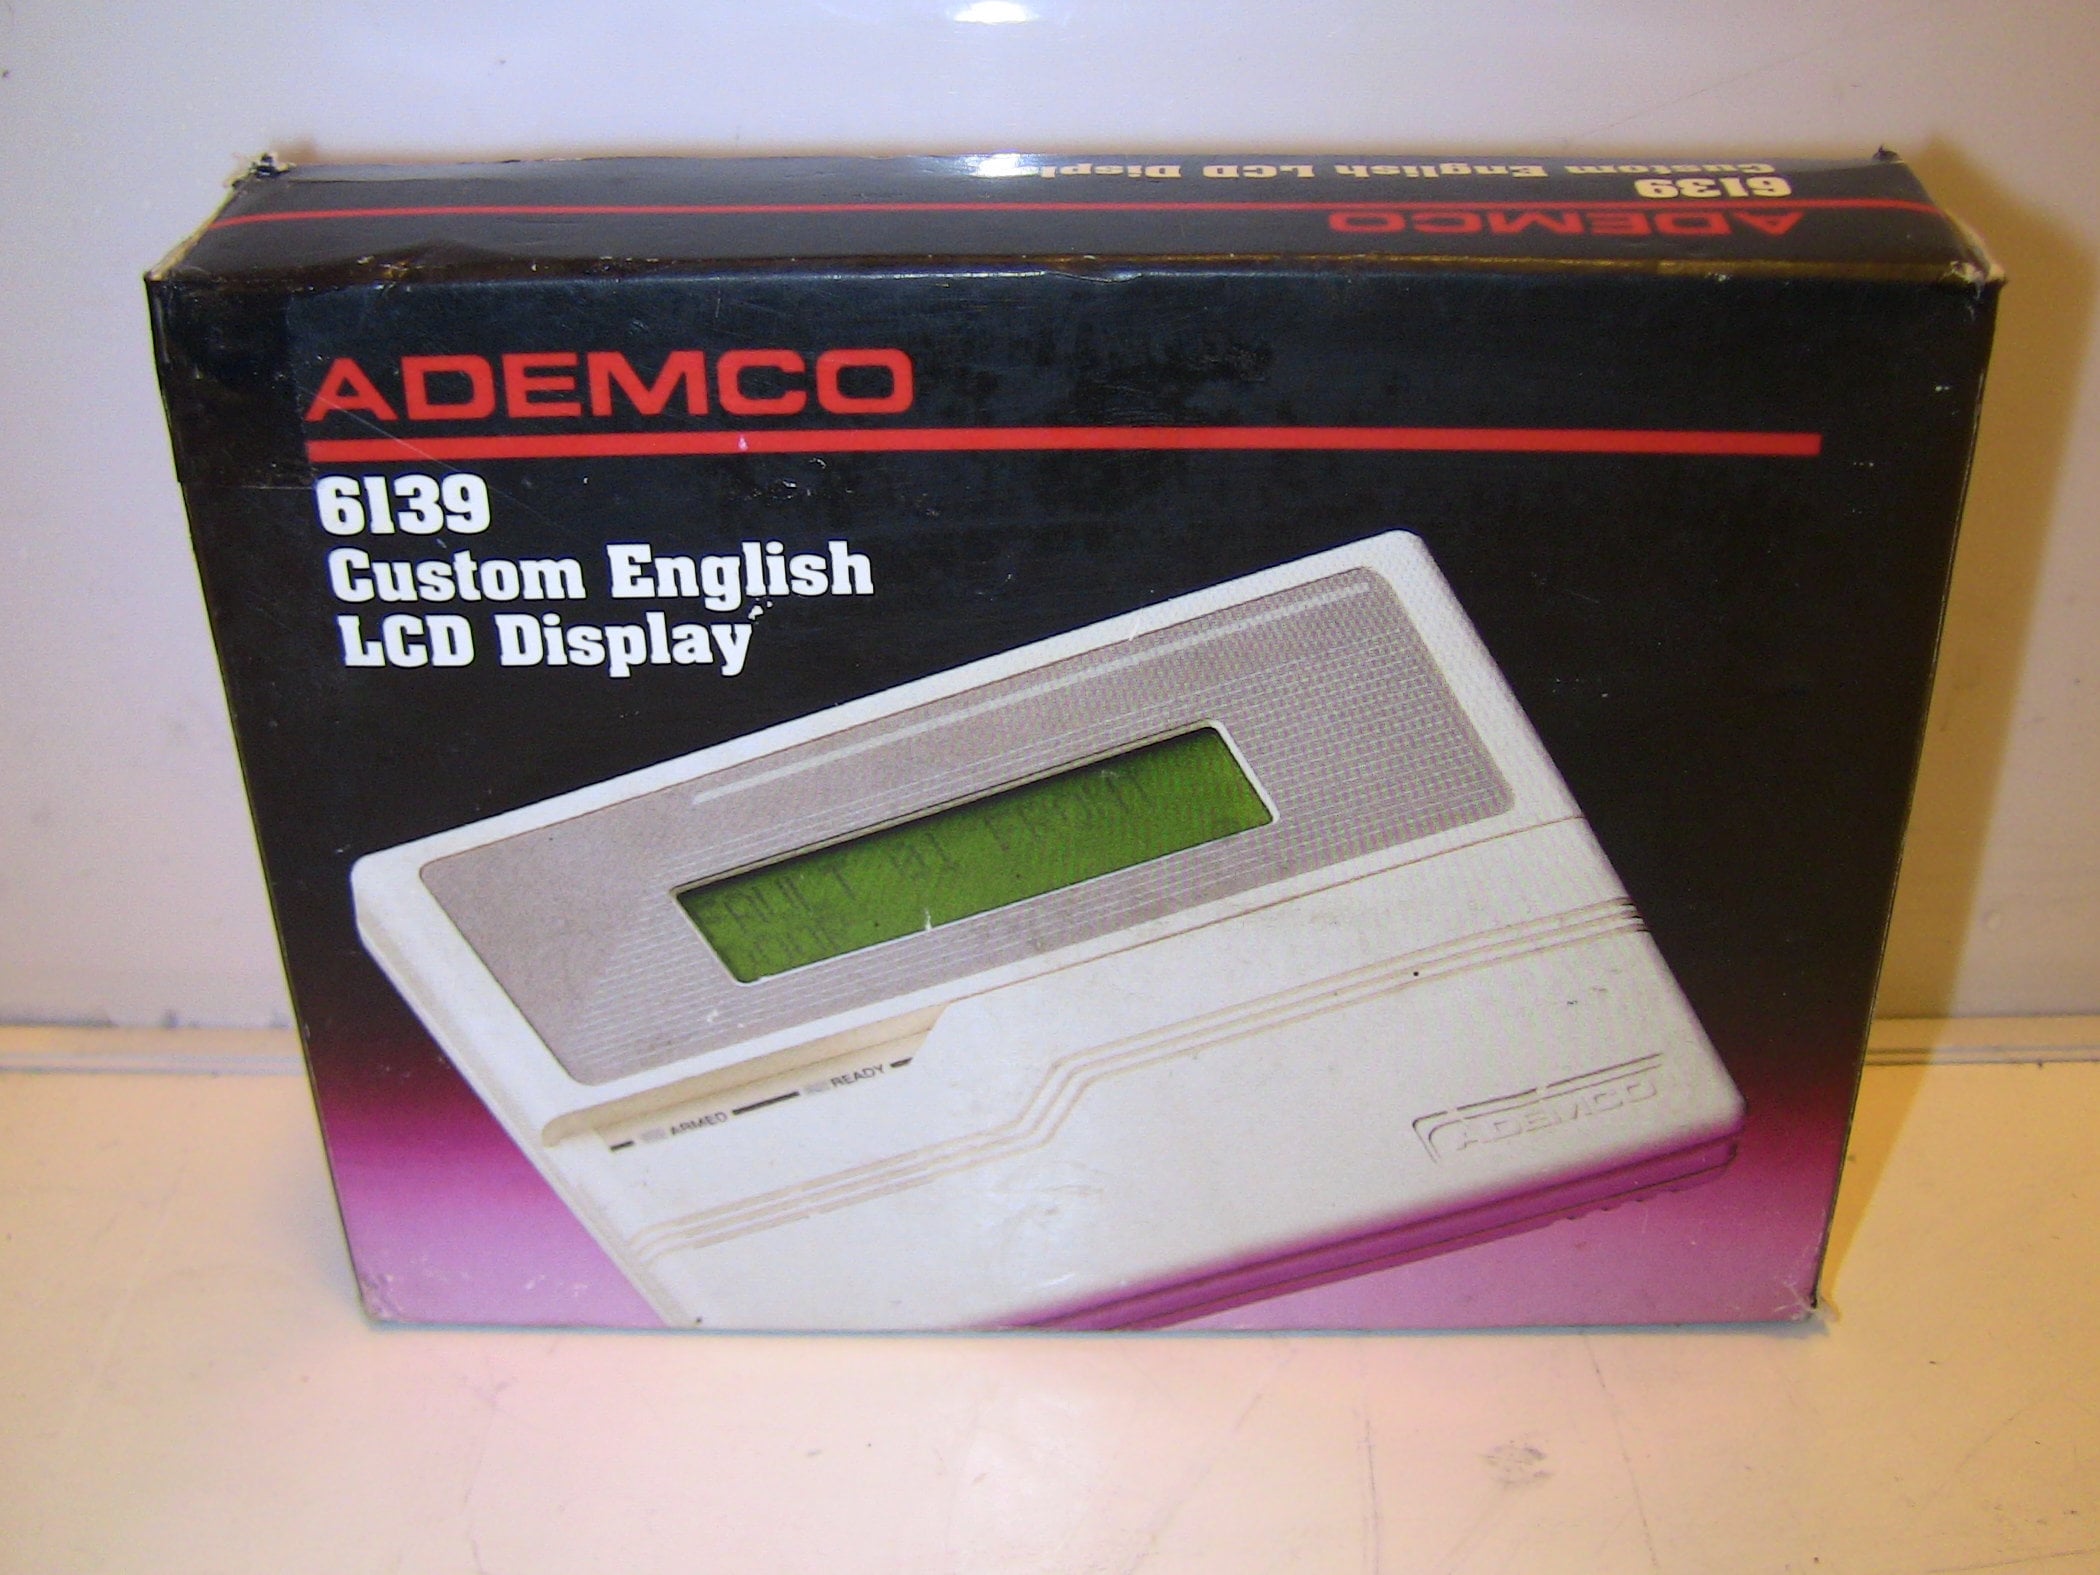 Honeywell 6139 Custom English Alpha Numeric Keypad. ADEMCO Ademco 